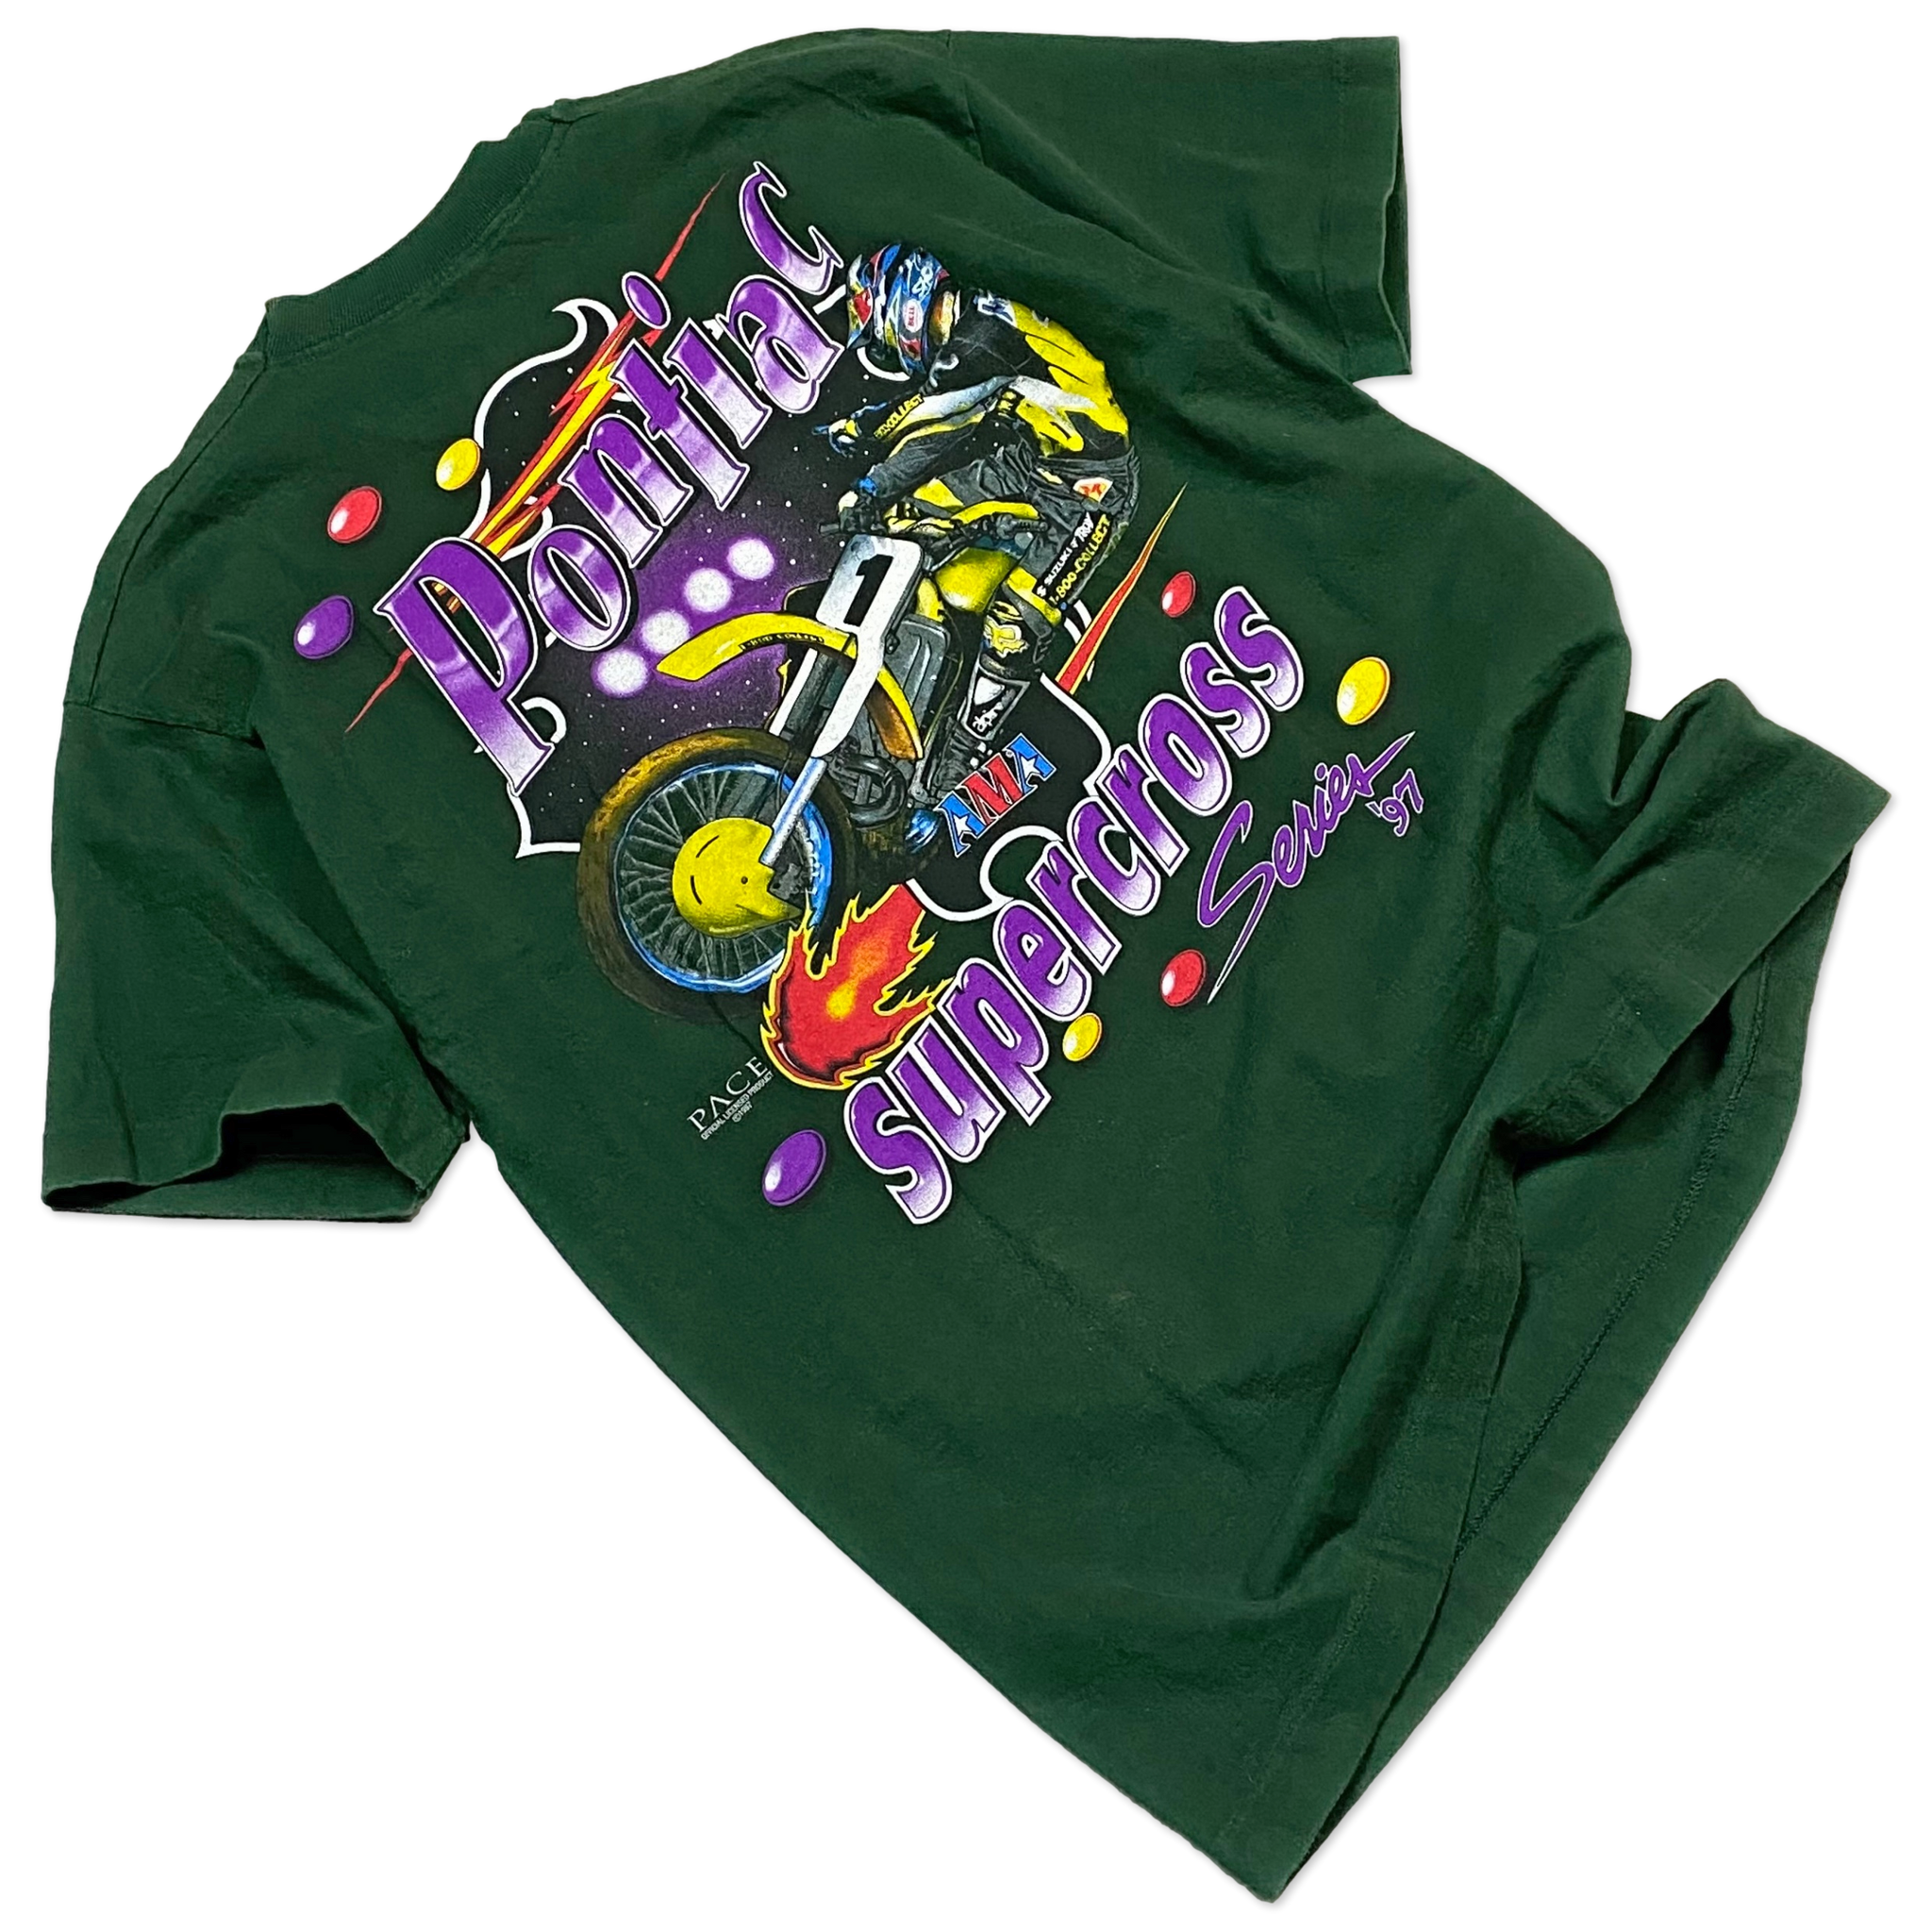 NOS 1997 Pontiac Supercross Single Stitch T-Shirt - Large